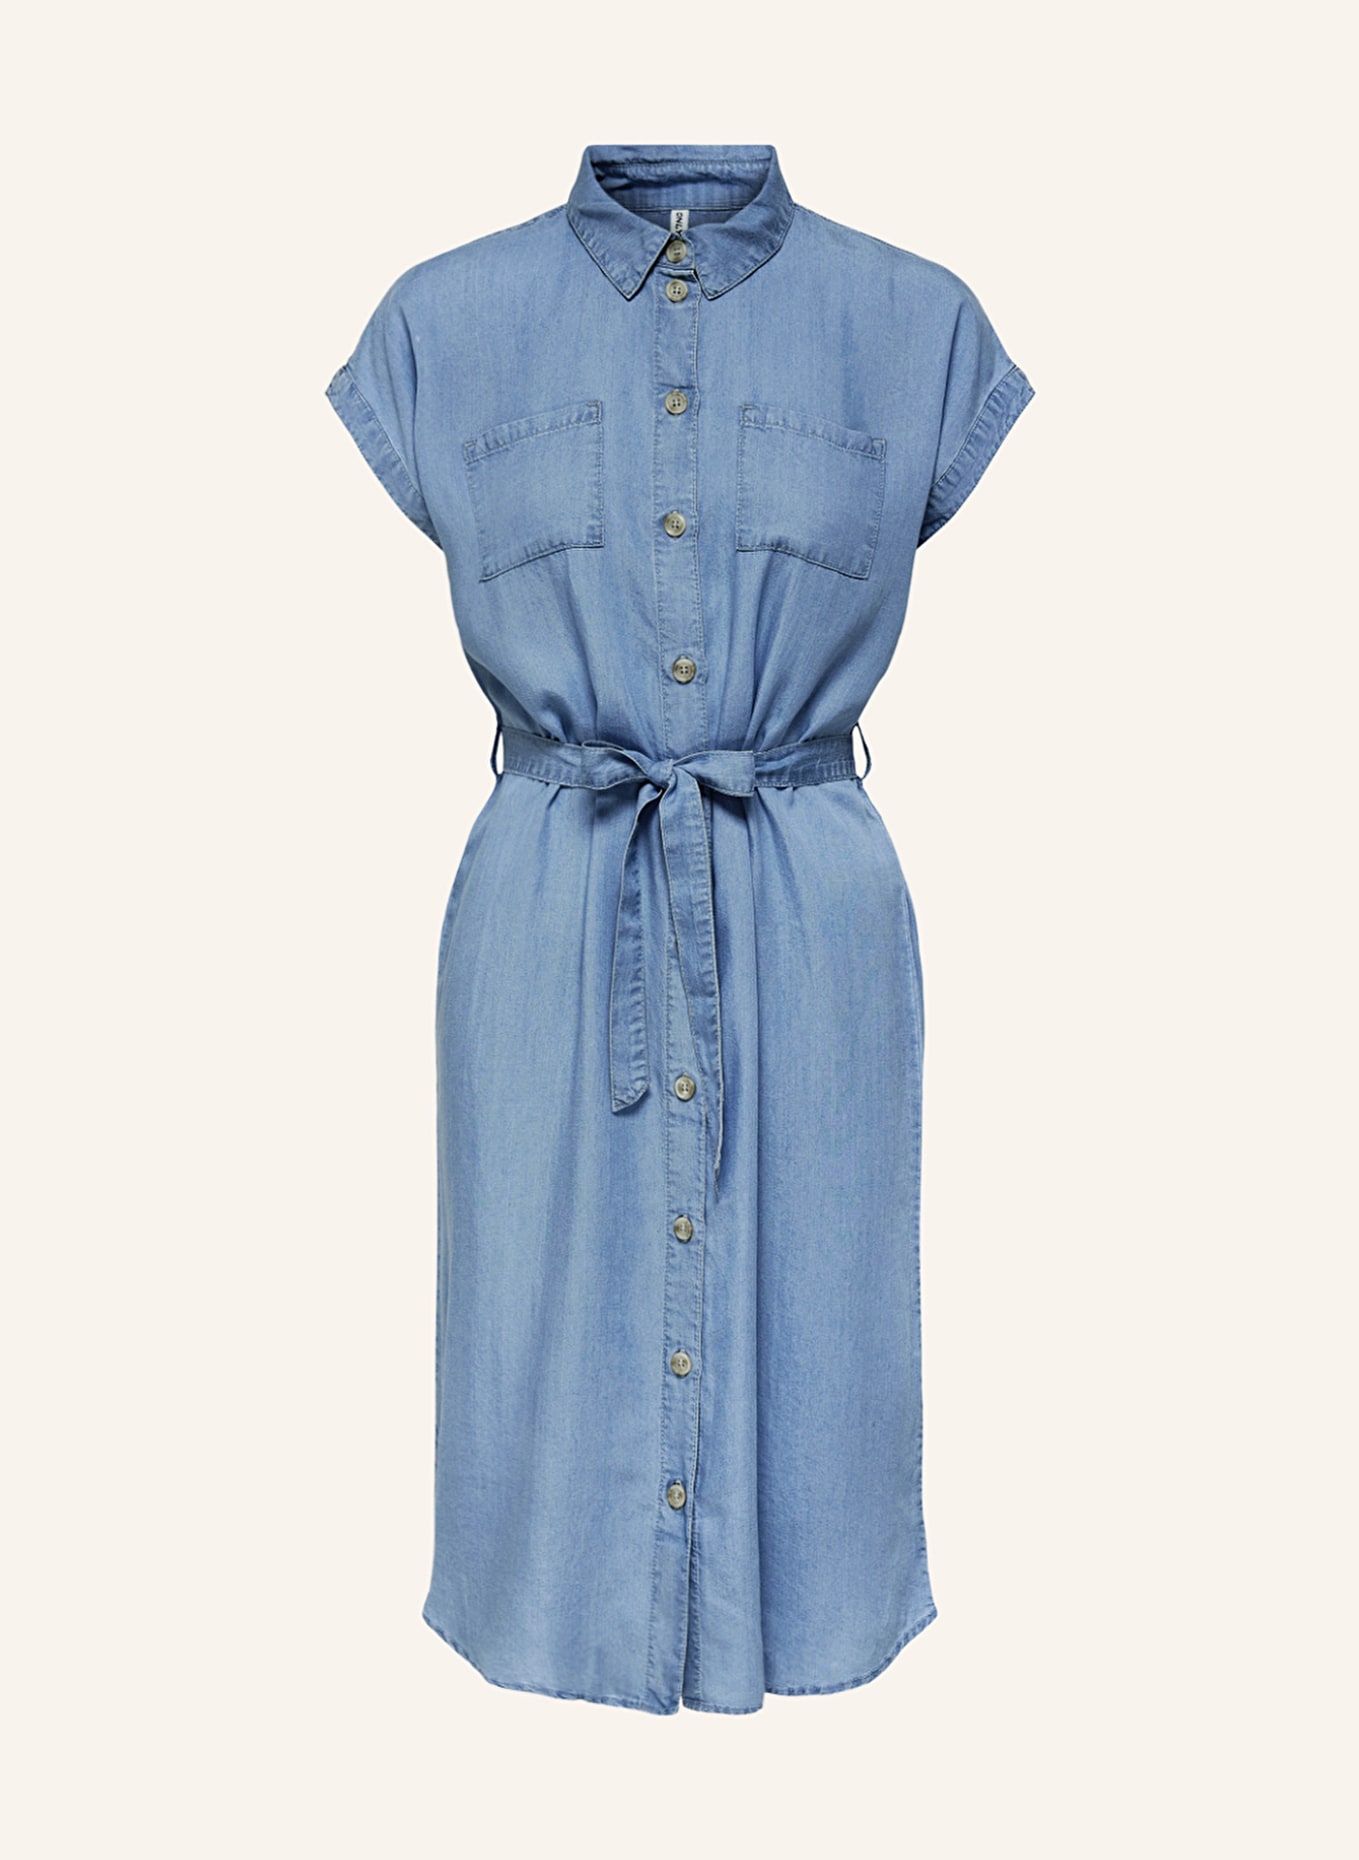 ONLY Shirt dress in denim look, Color: BLUE (Image 1)